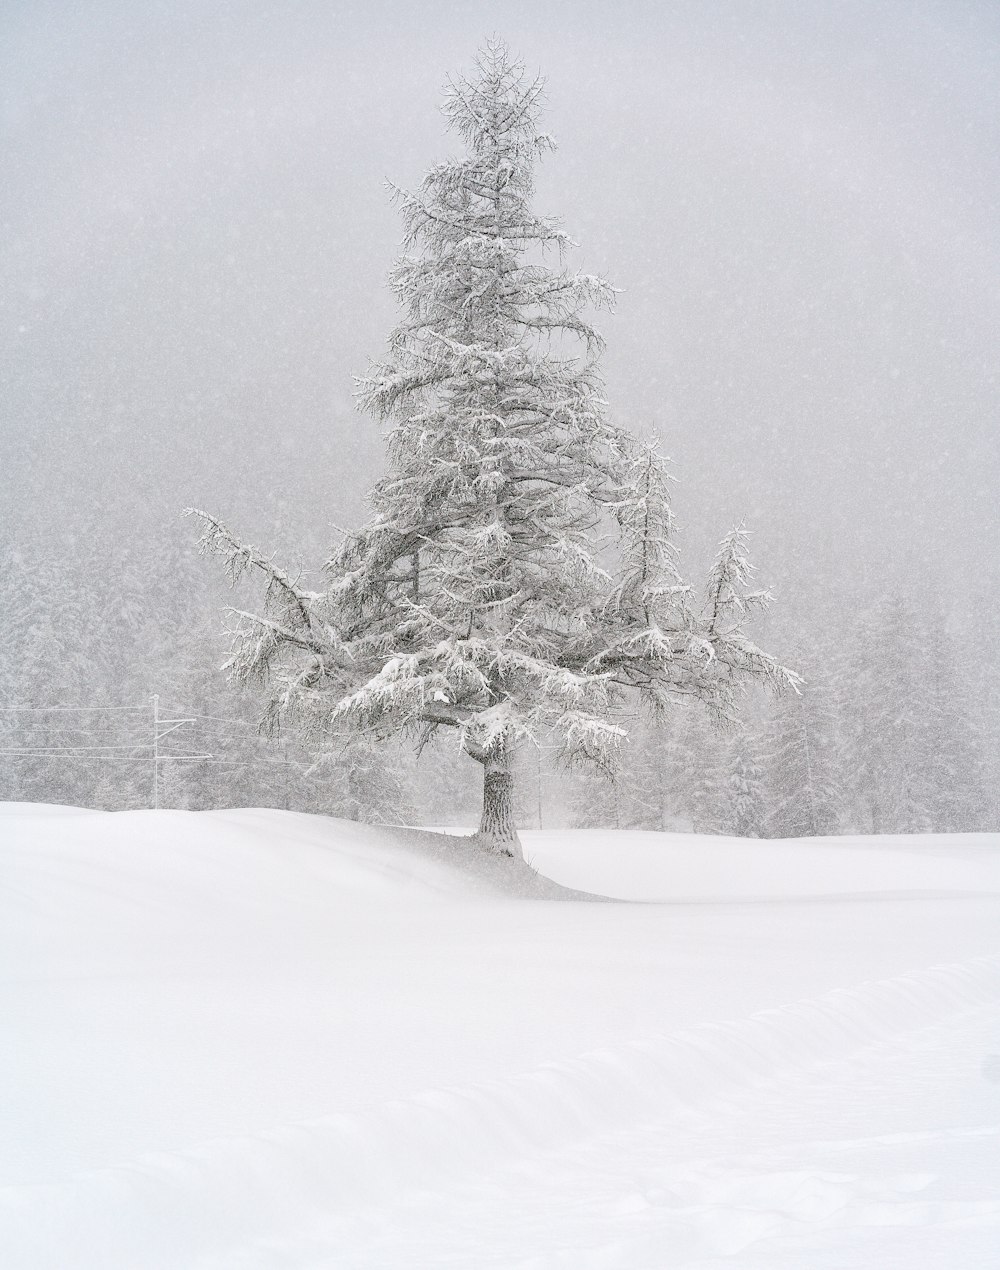 a lone pine tree in a snowy landscape